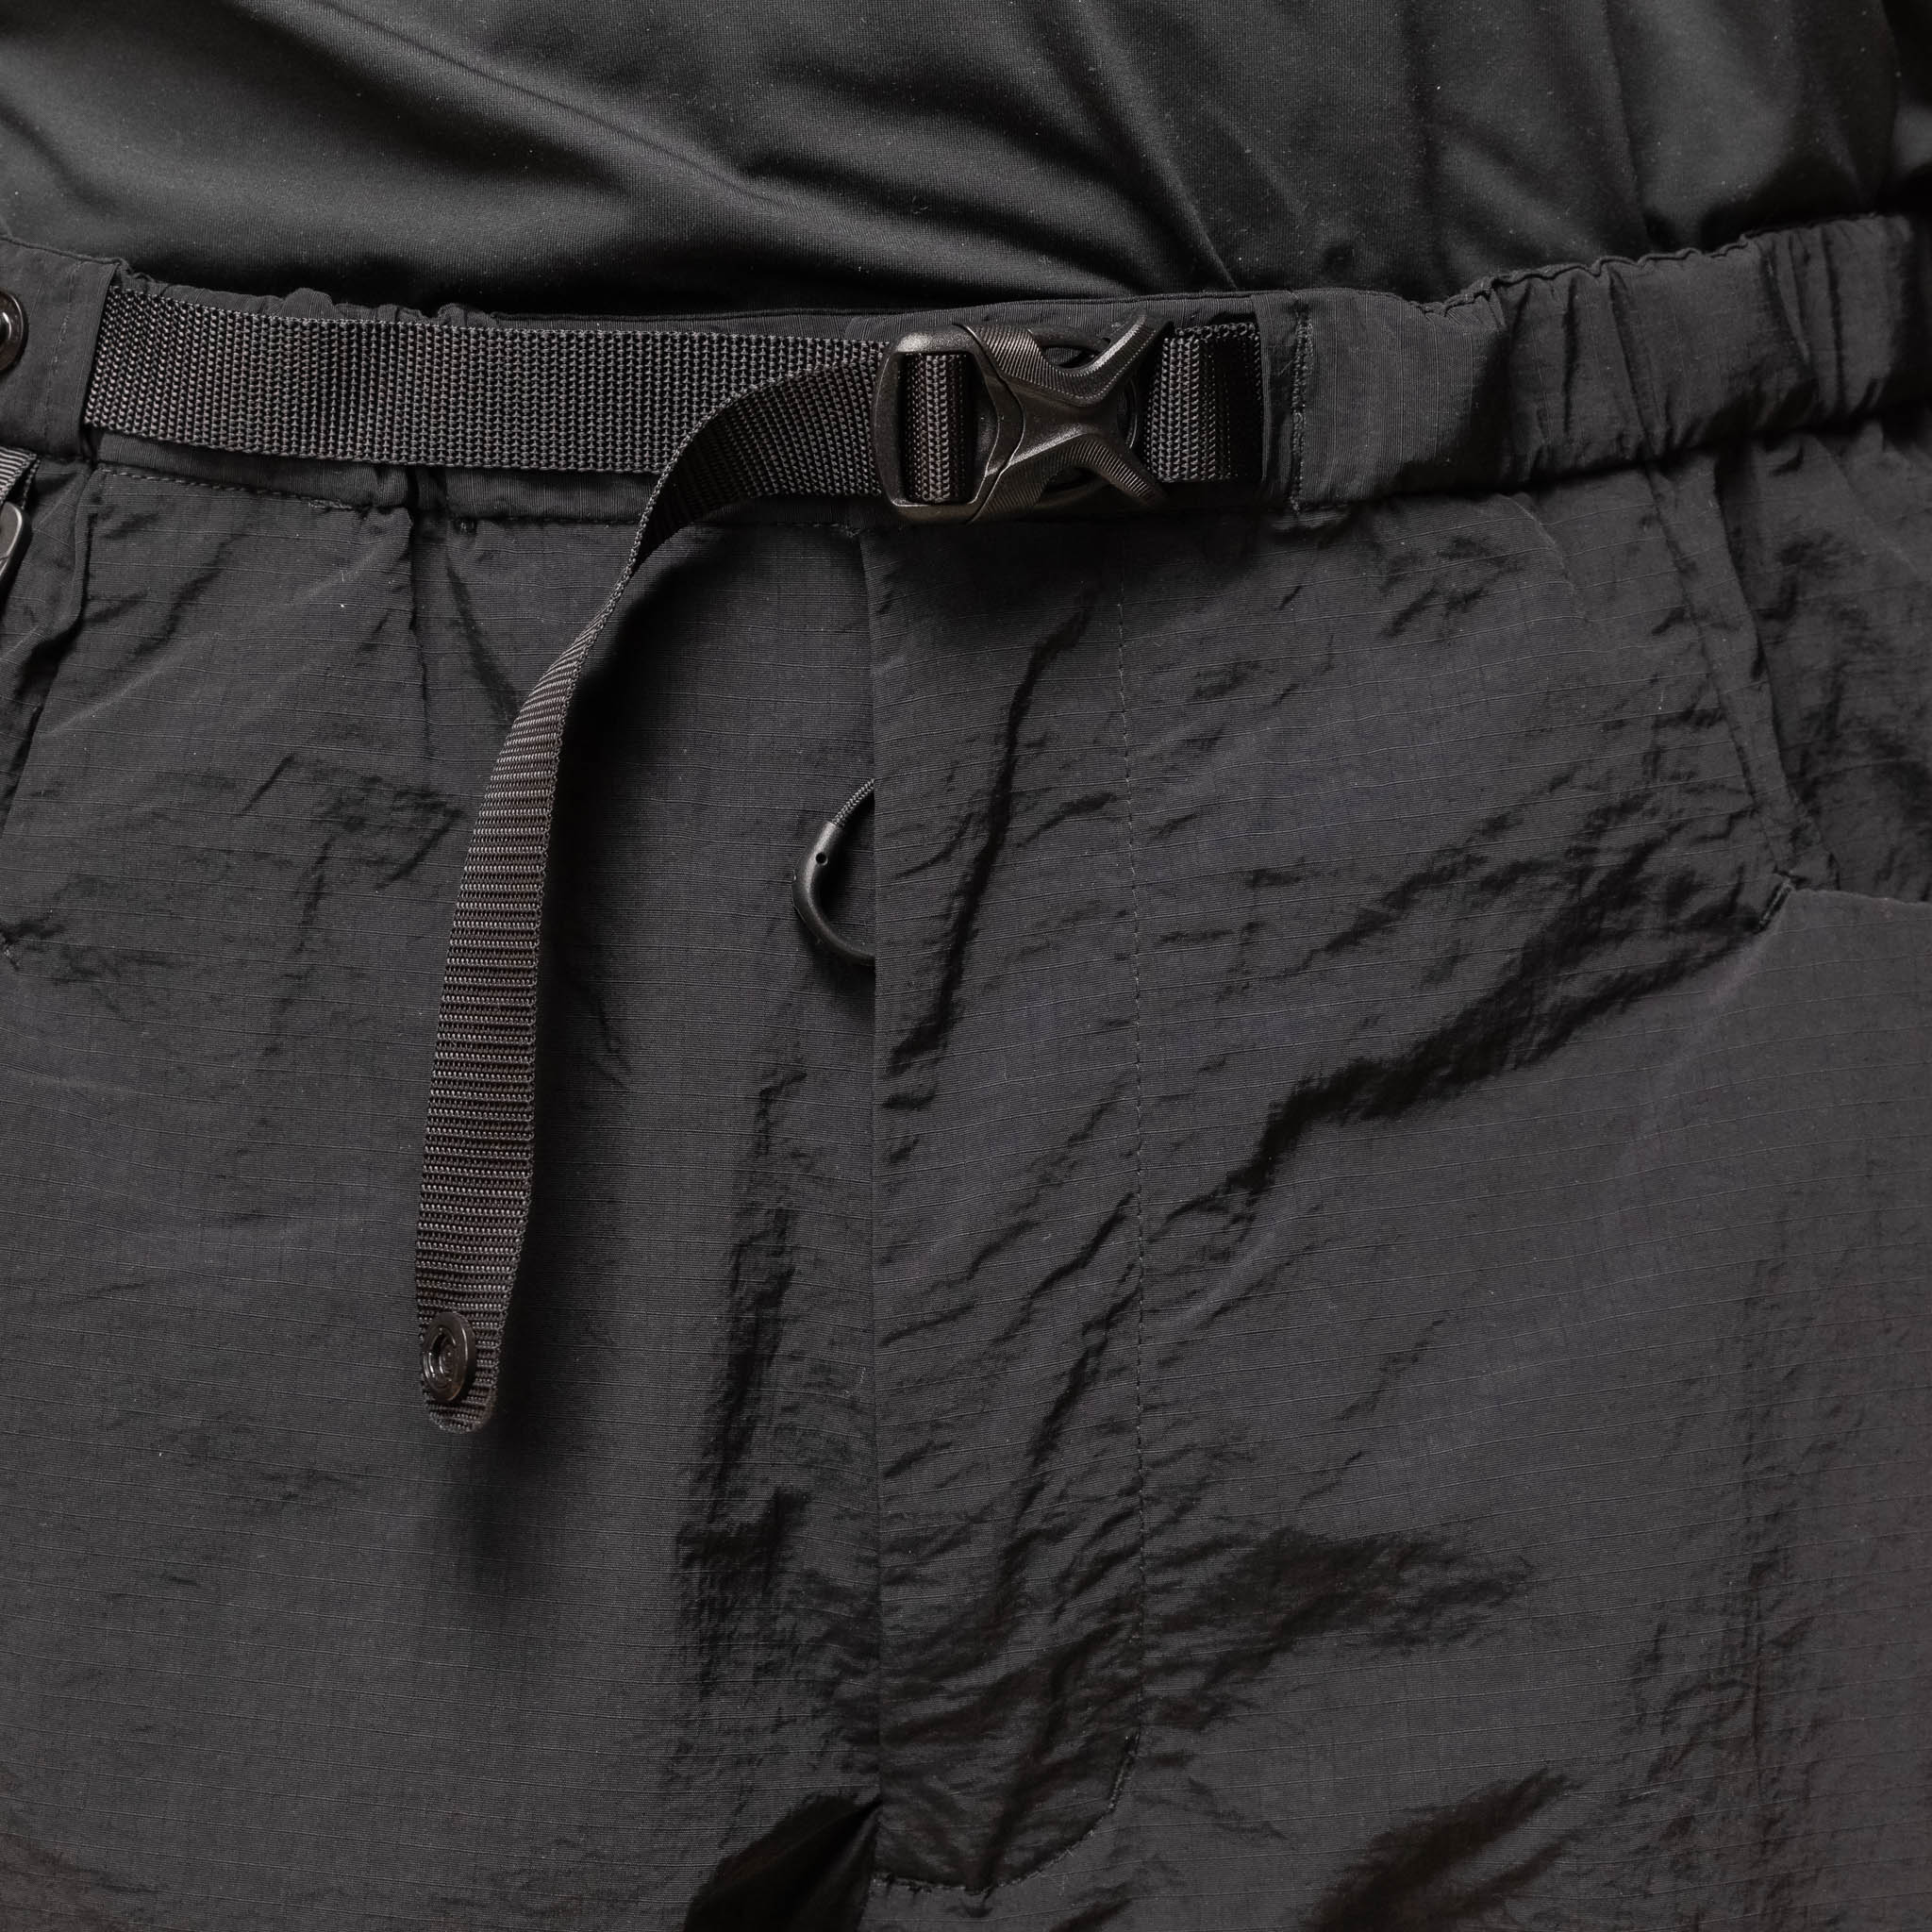 CMF Outdoor Garment - Activity Shorts - Black